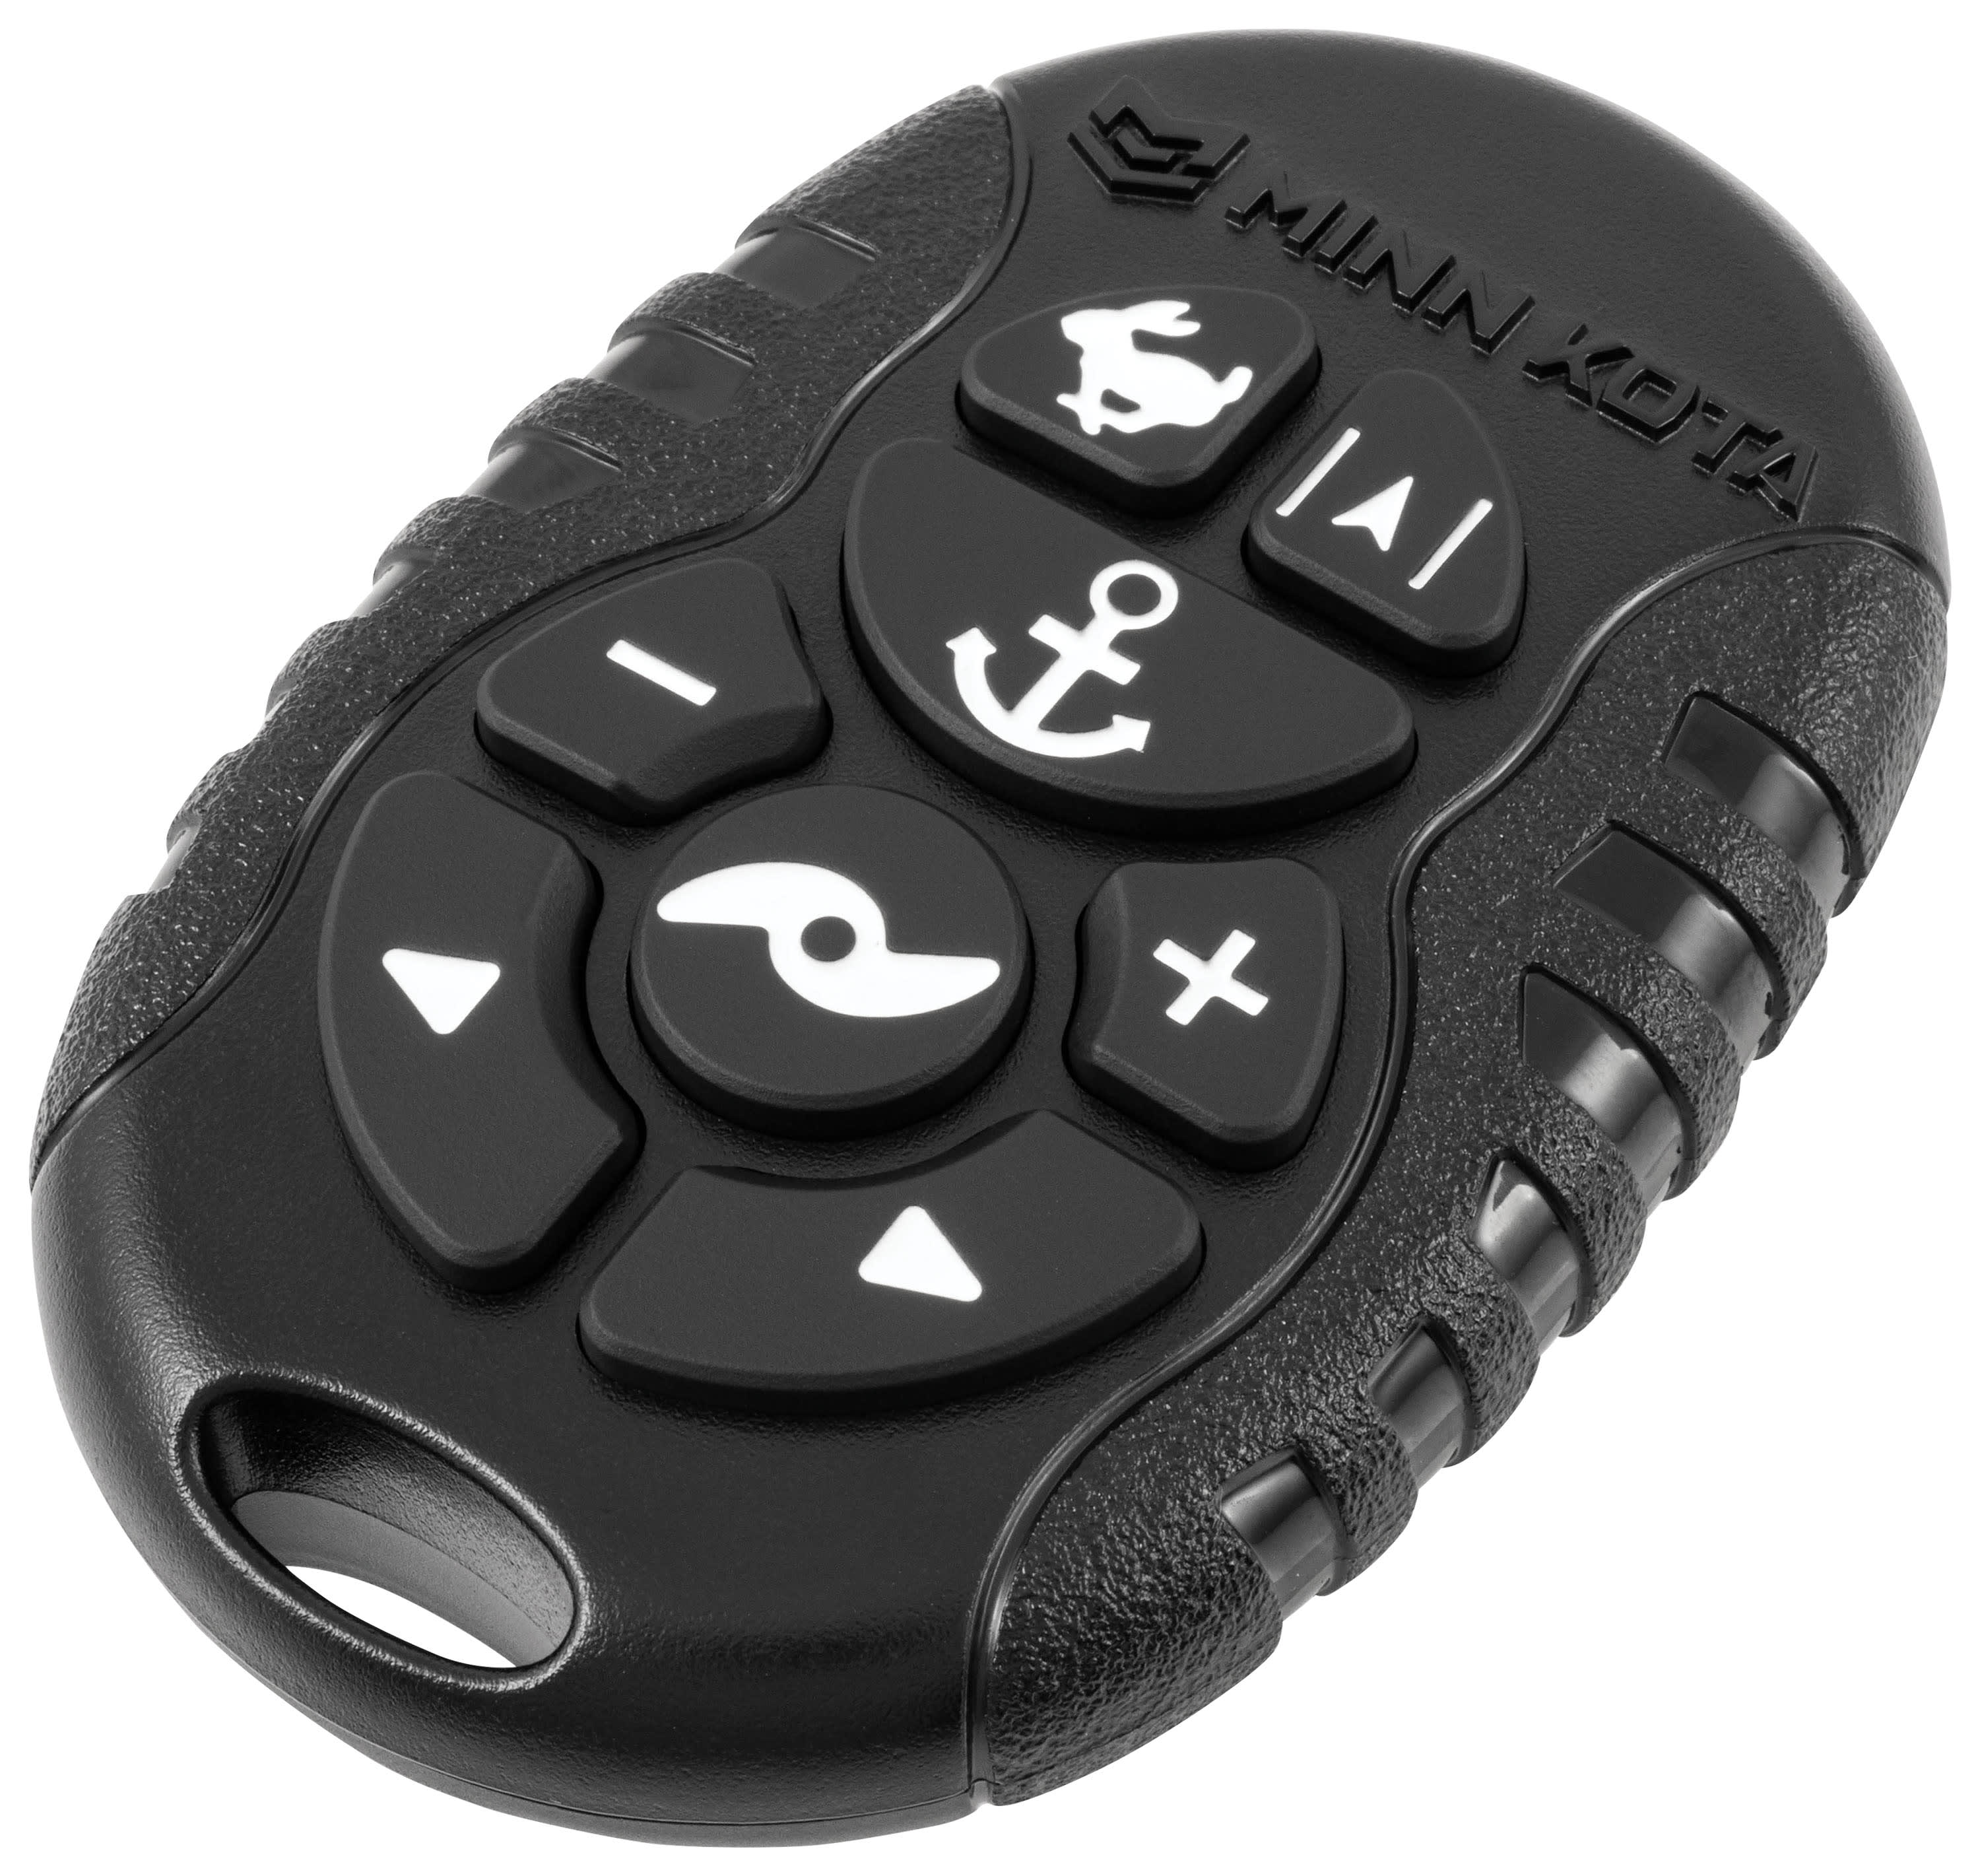 Minn Kota® Advanced GPS Navigation Bluetooth Micro Remote